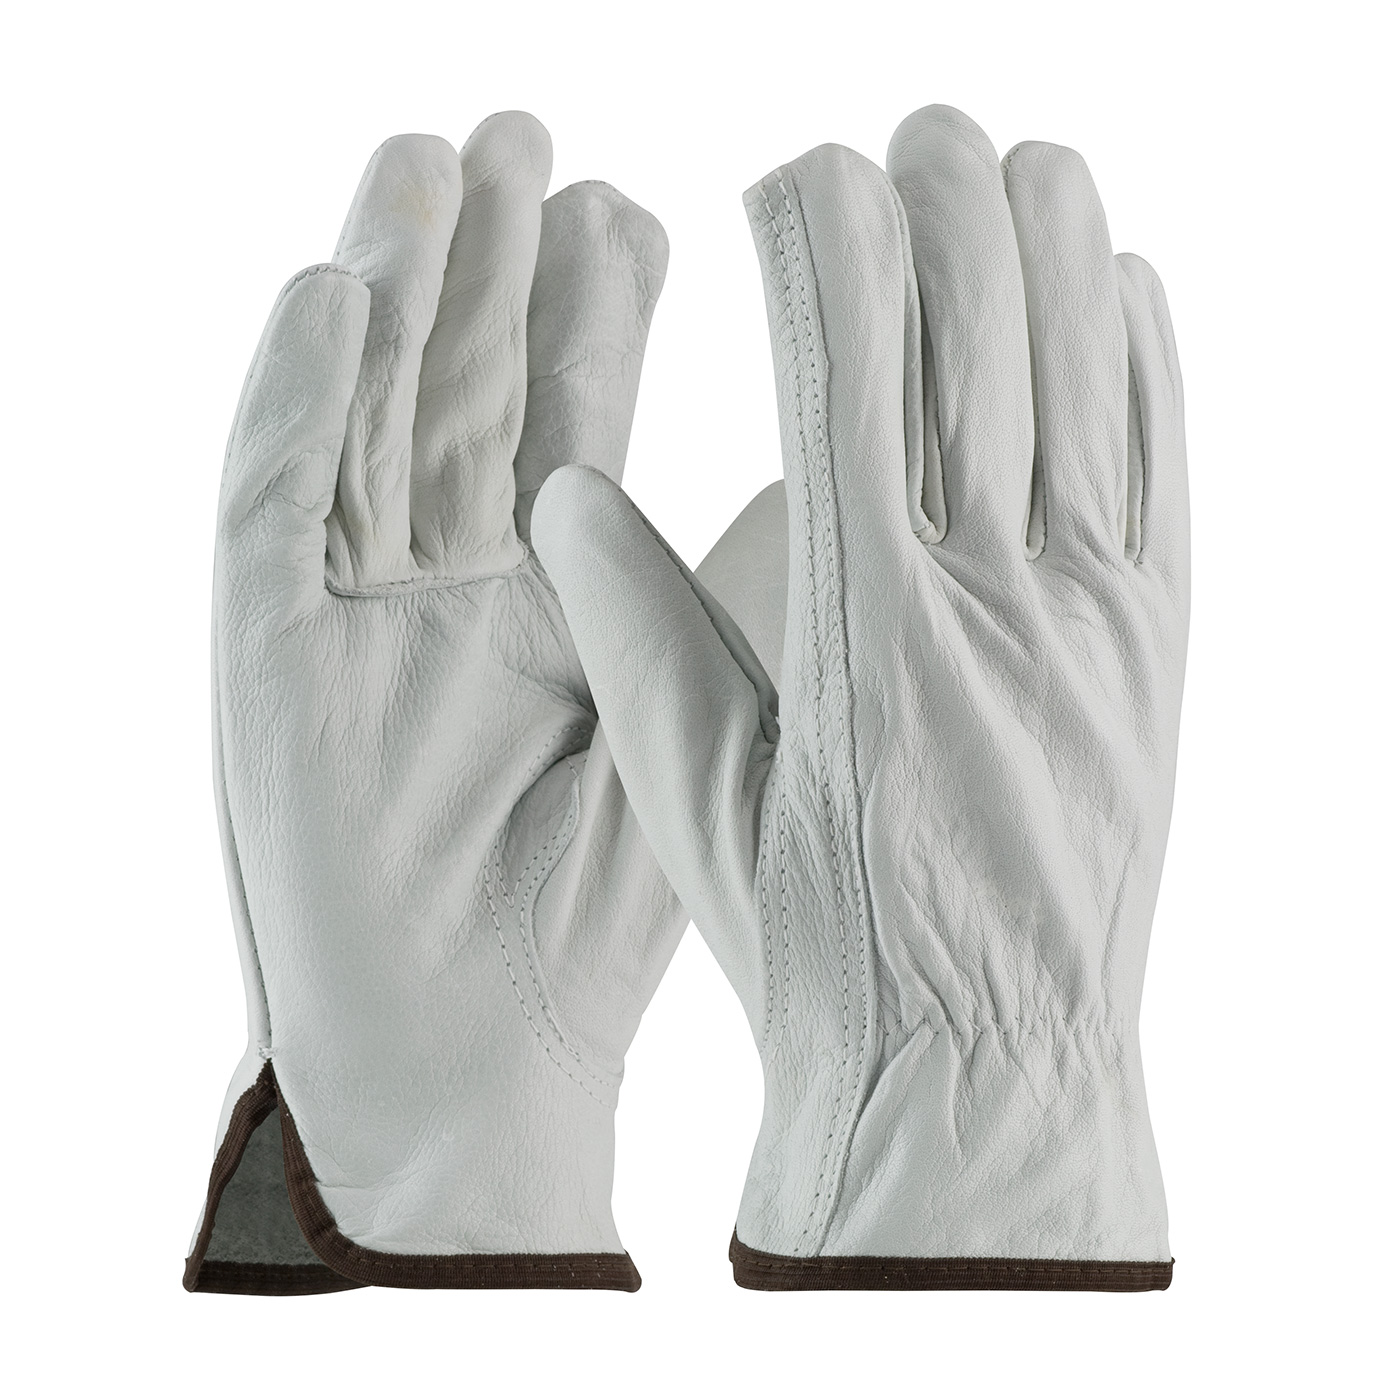 PIP 68-162/XL Economy Grade Top Grain Cowhide Leather Drivers Glove - Keystone Thumb - X-Large PID-68 162 XL